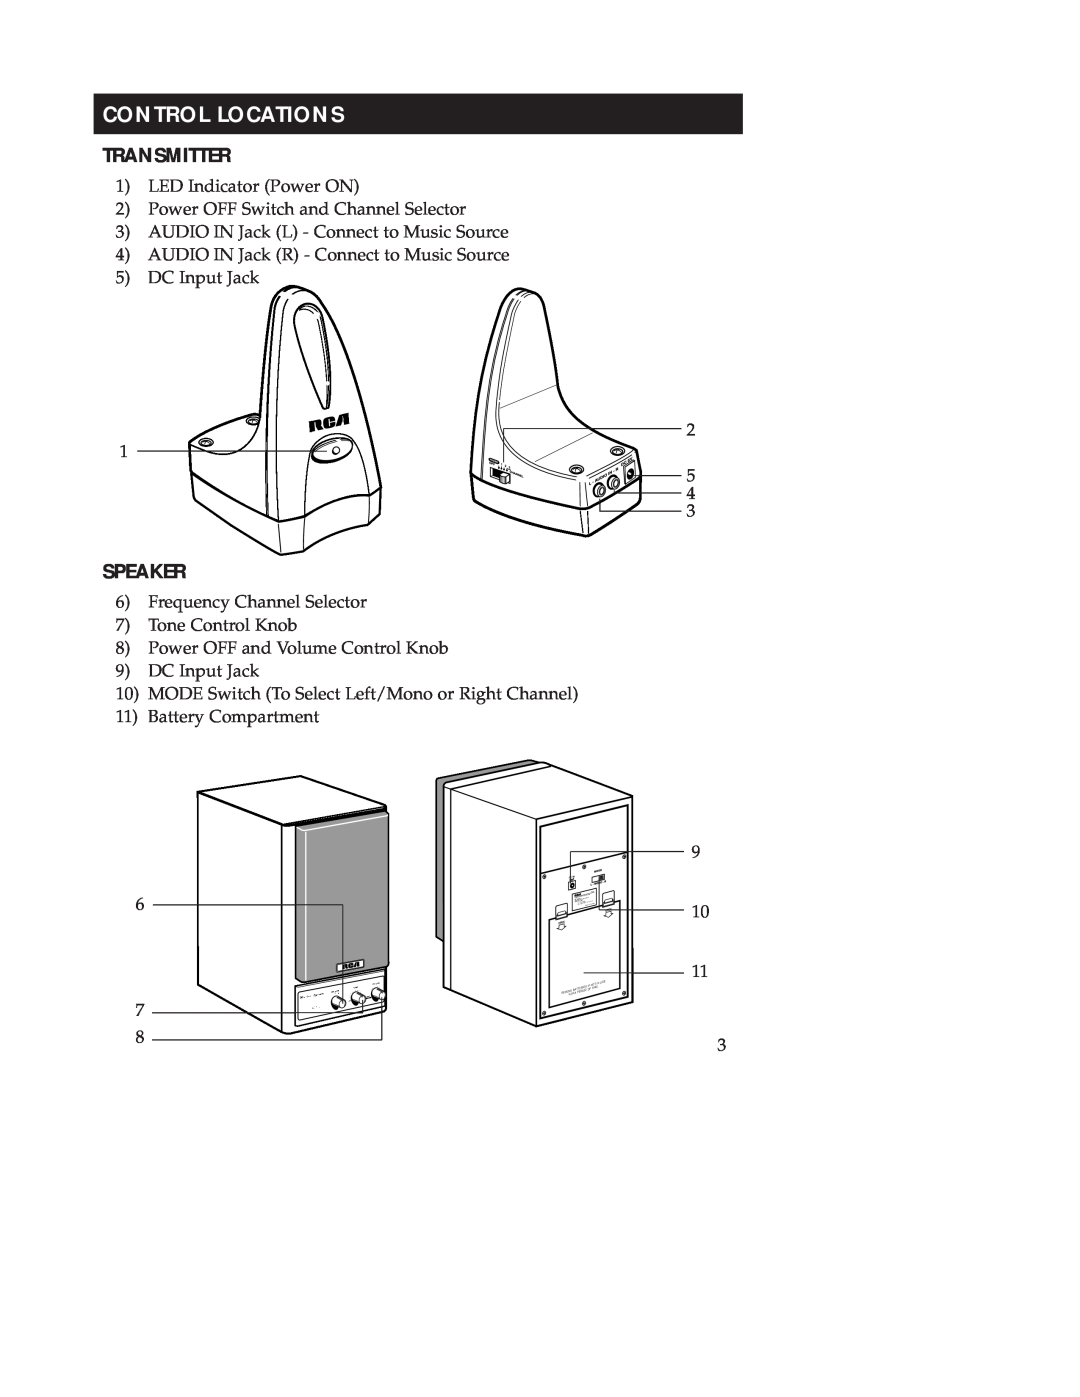 Samsung WSP200 manual Control Locations, Transmitter, Speaker 